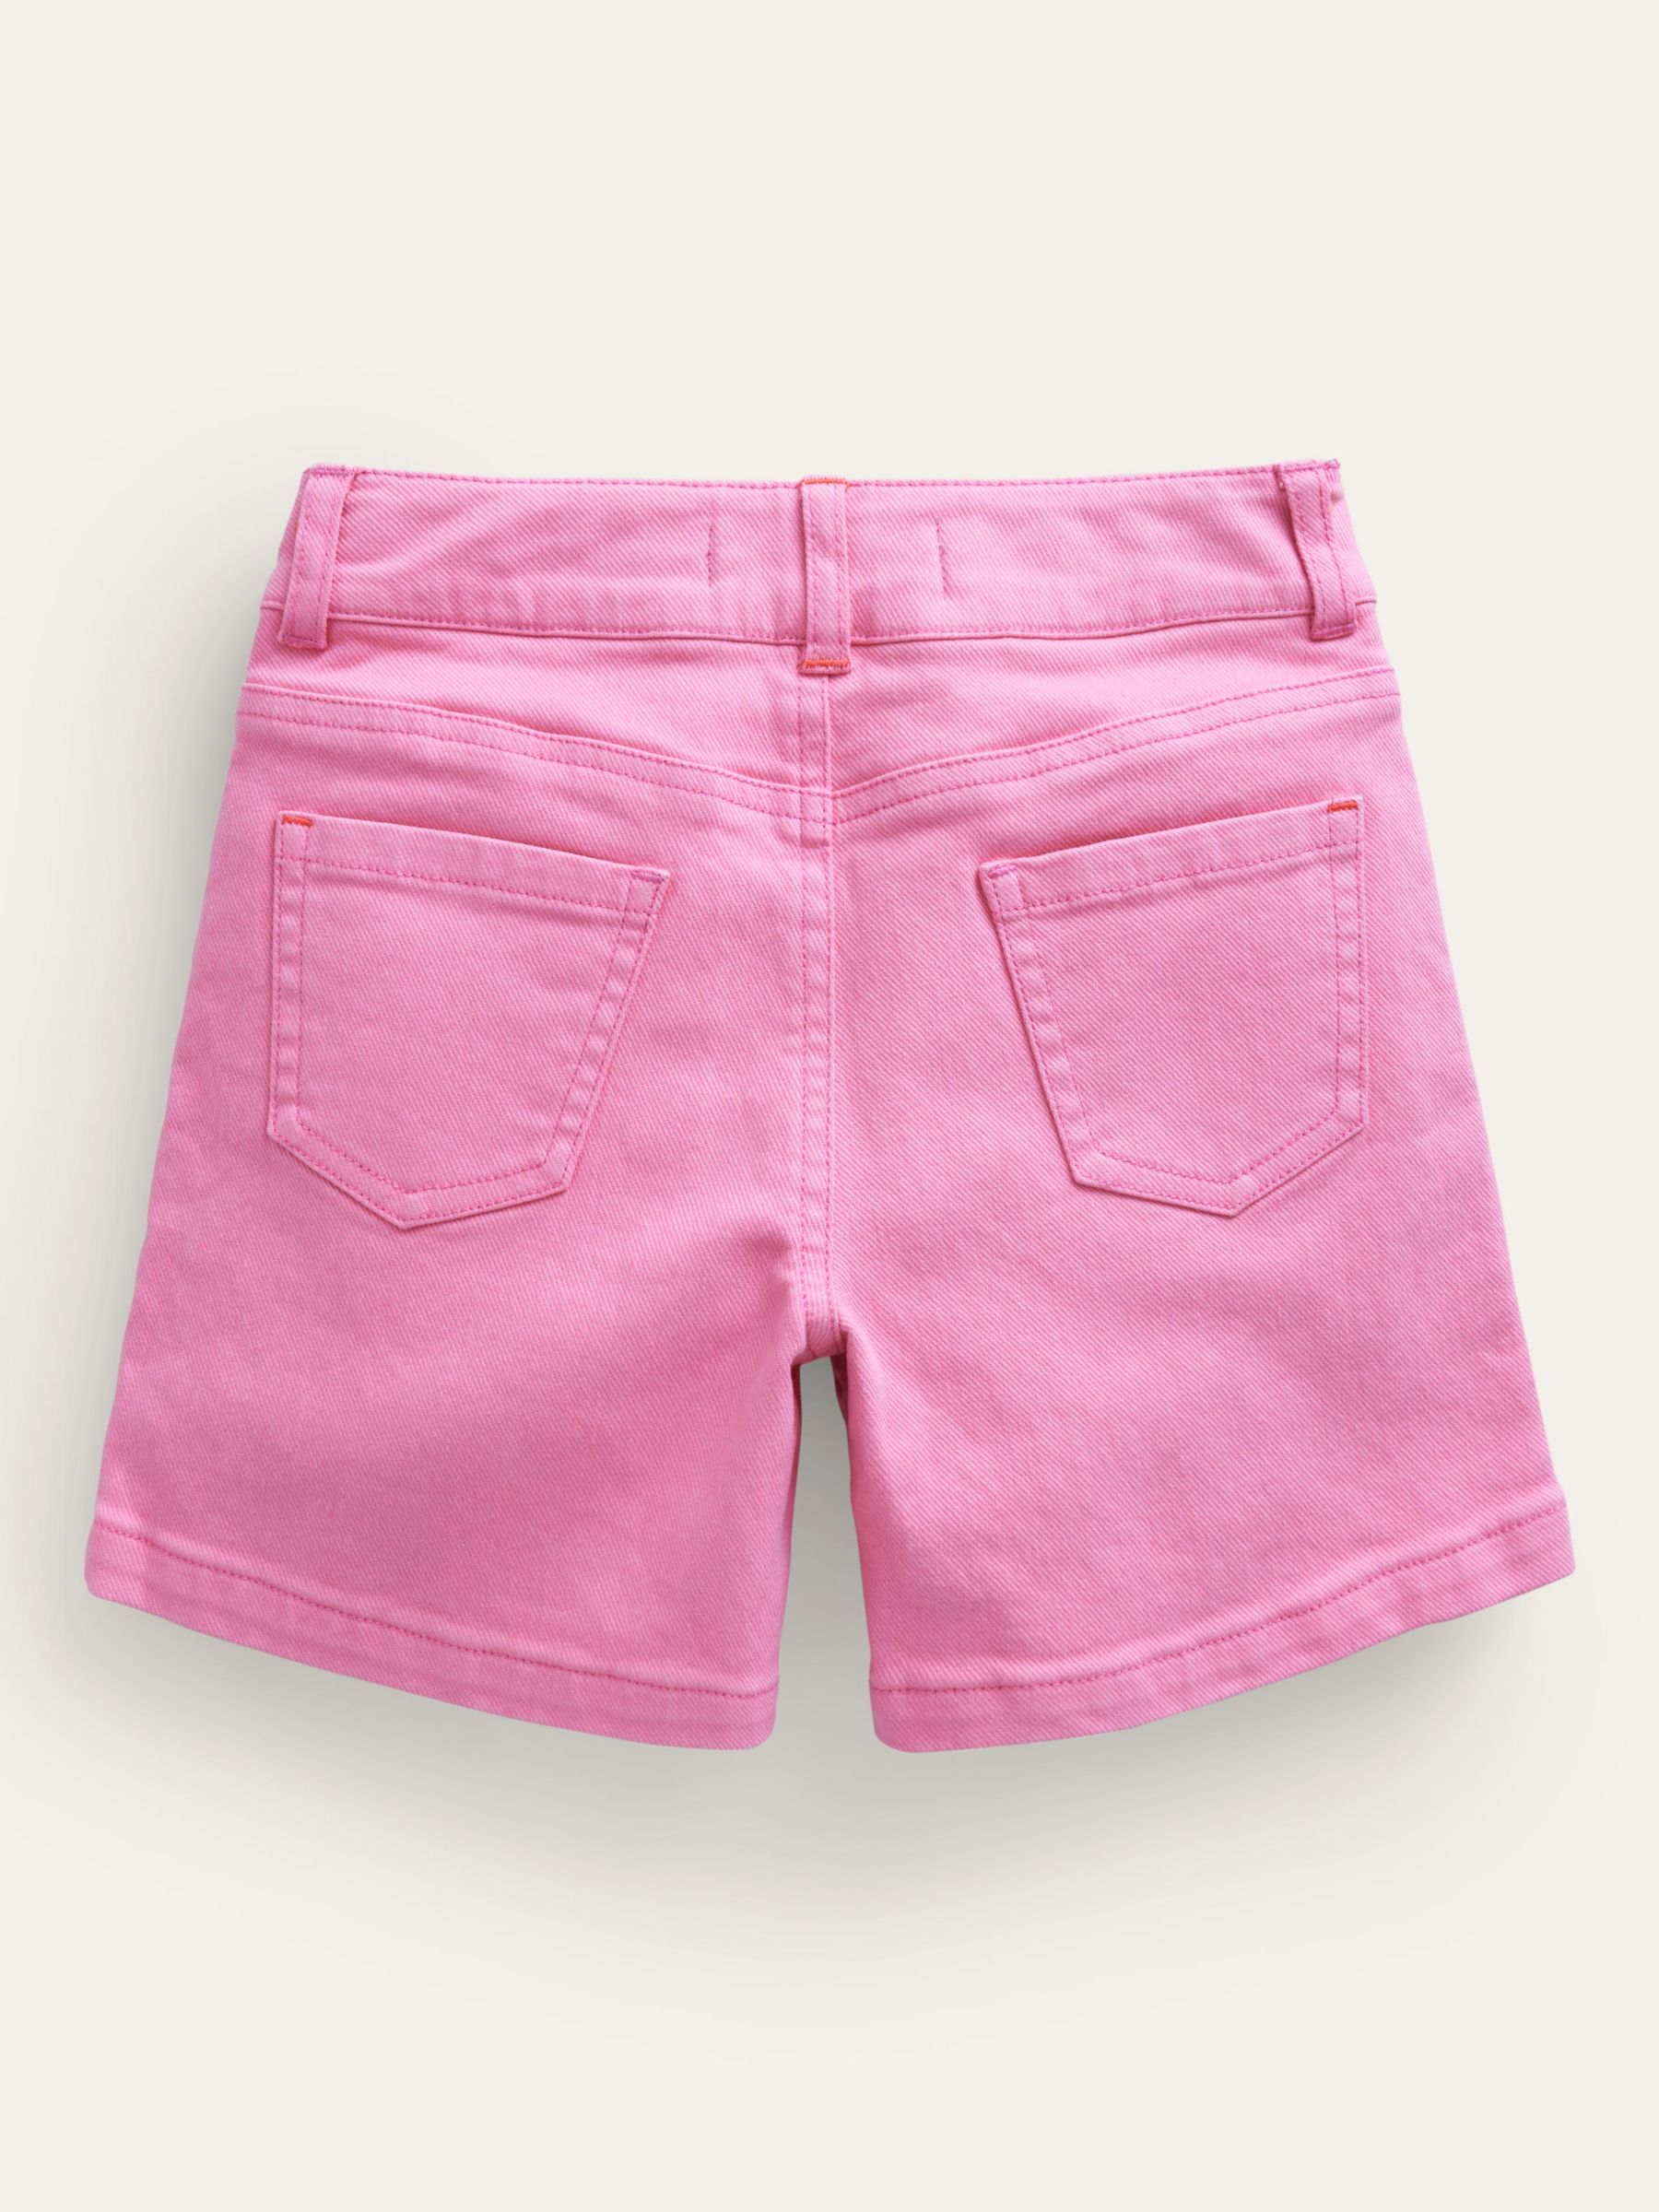 Mini Boden Kids' Denim Shorts, Strawberry Milkshake, 3 years